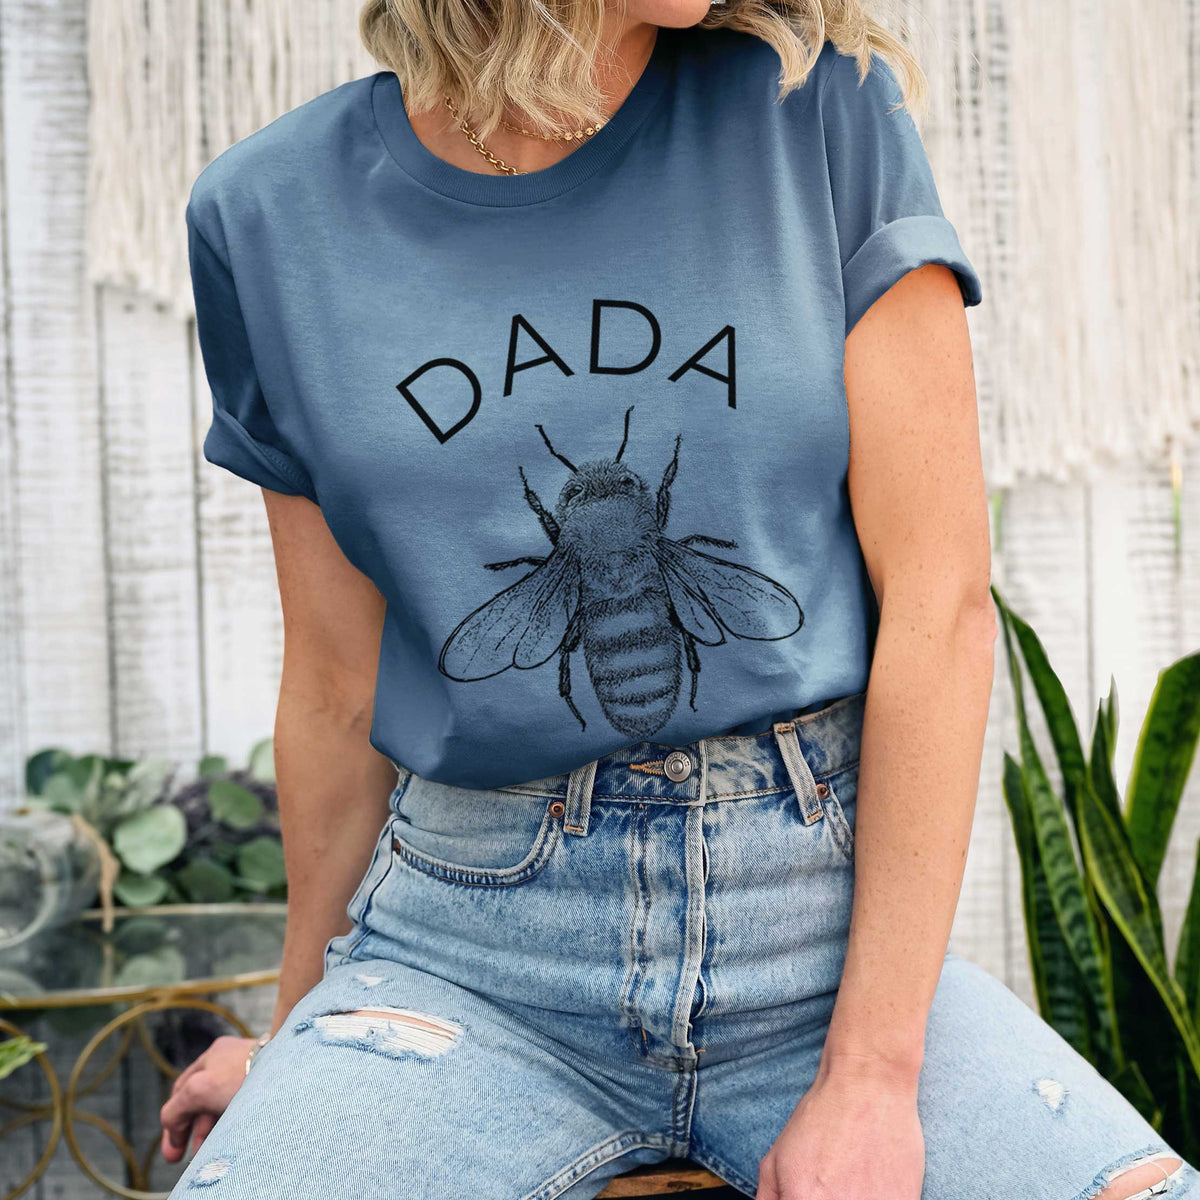 Dada Bee - Lightweight 100% Cotton Unisex Crewneck